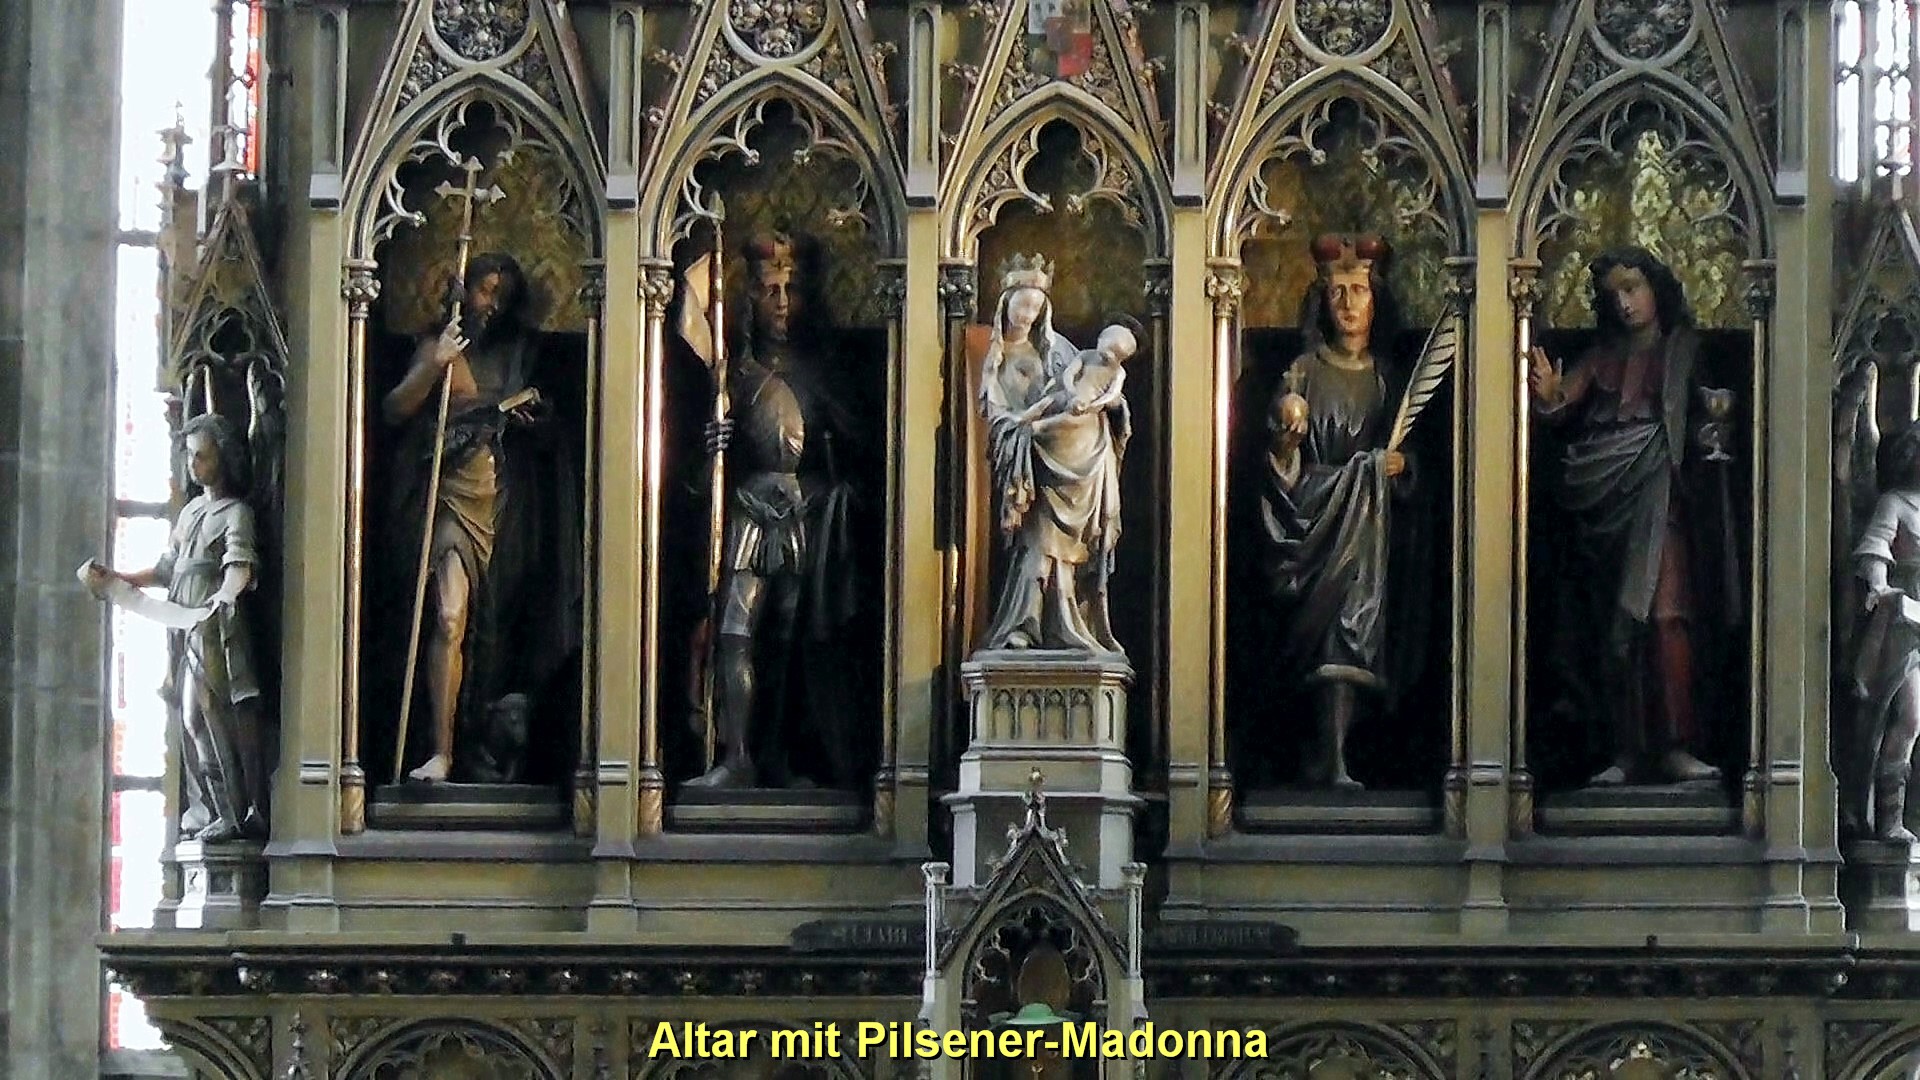 Pilsen Altar mit Pilsener Madonna